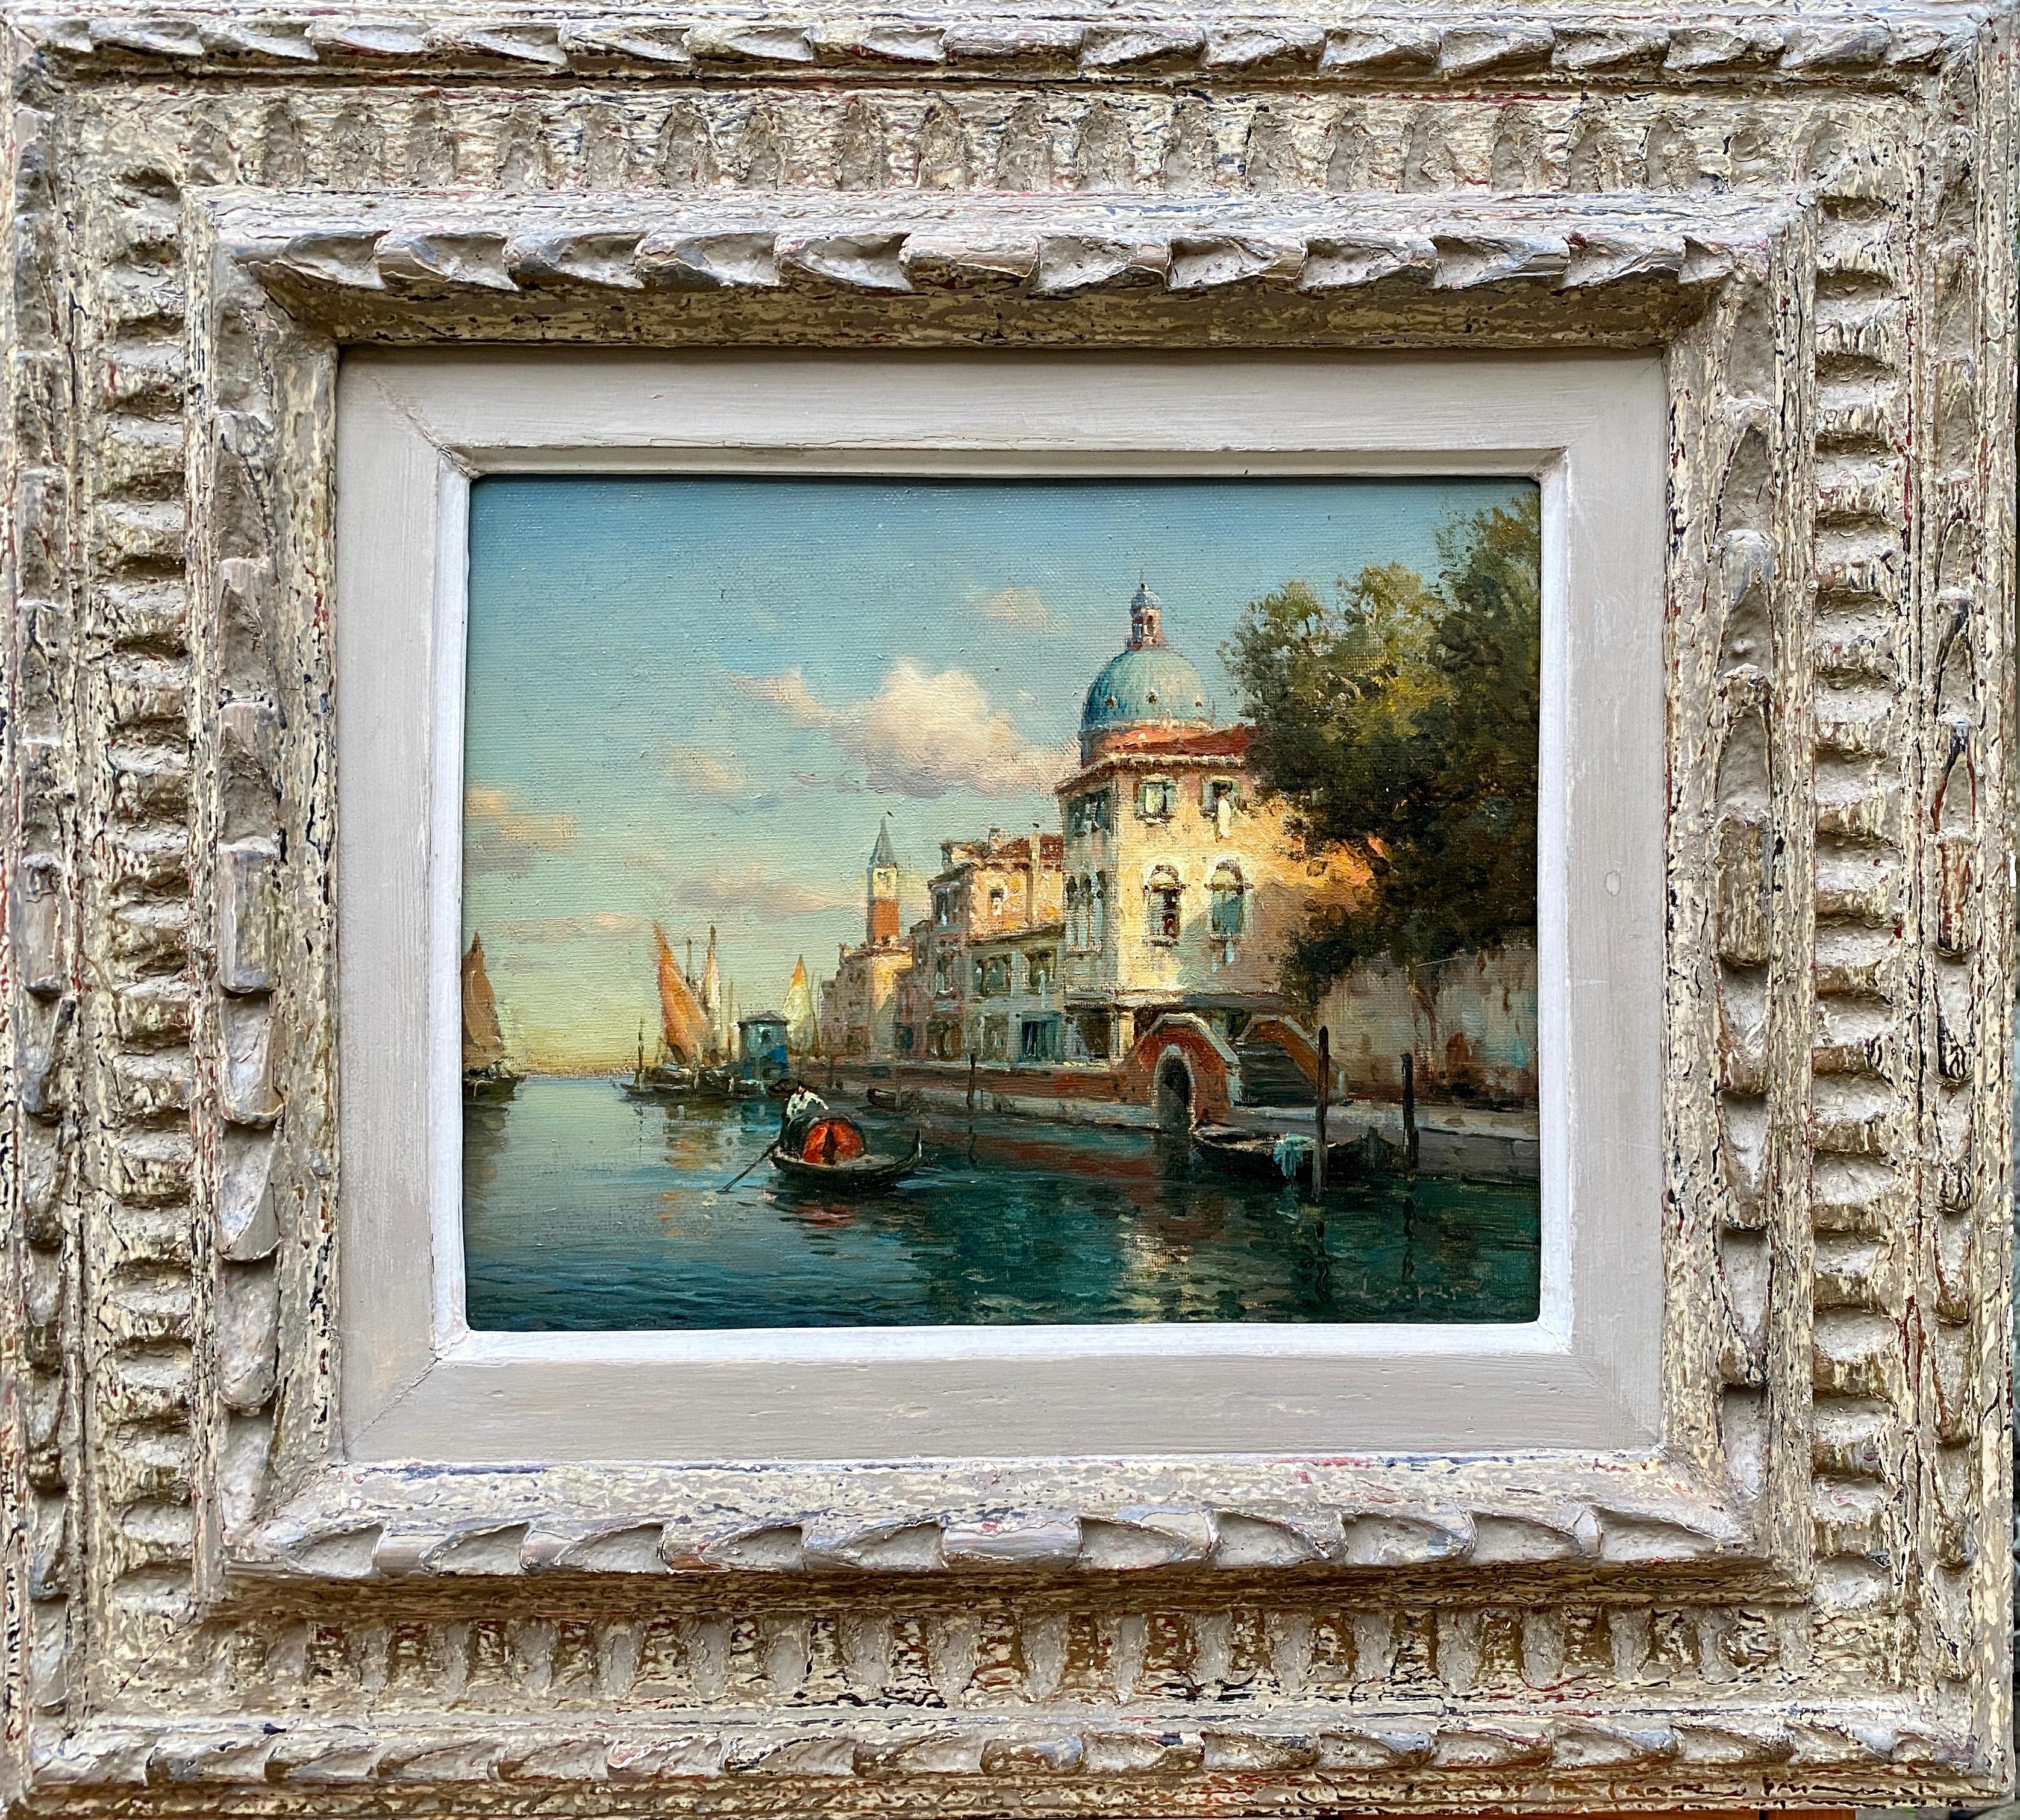 Bouvard Antoine snr. Landscape Painting - A View of Venice by Antoine Bouvard, Saint-Jean-de-Bournay 1870 – 1955, French